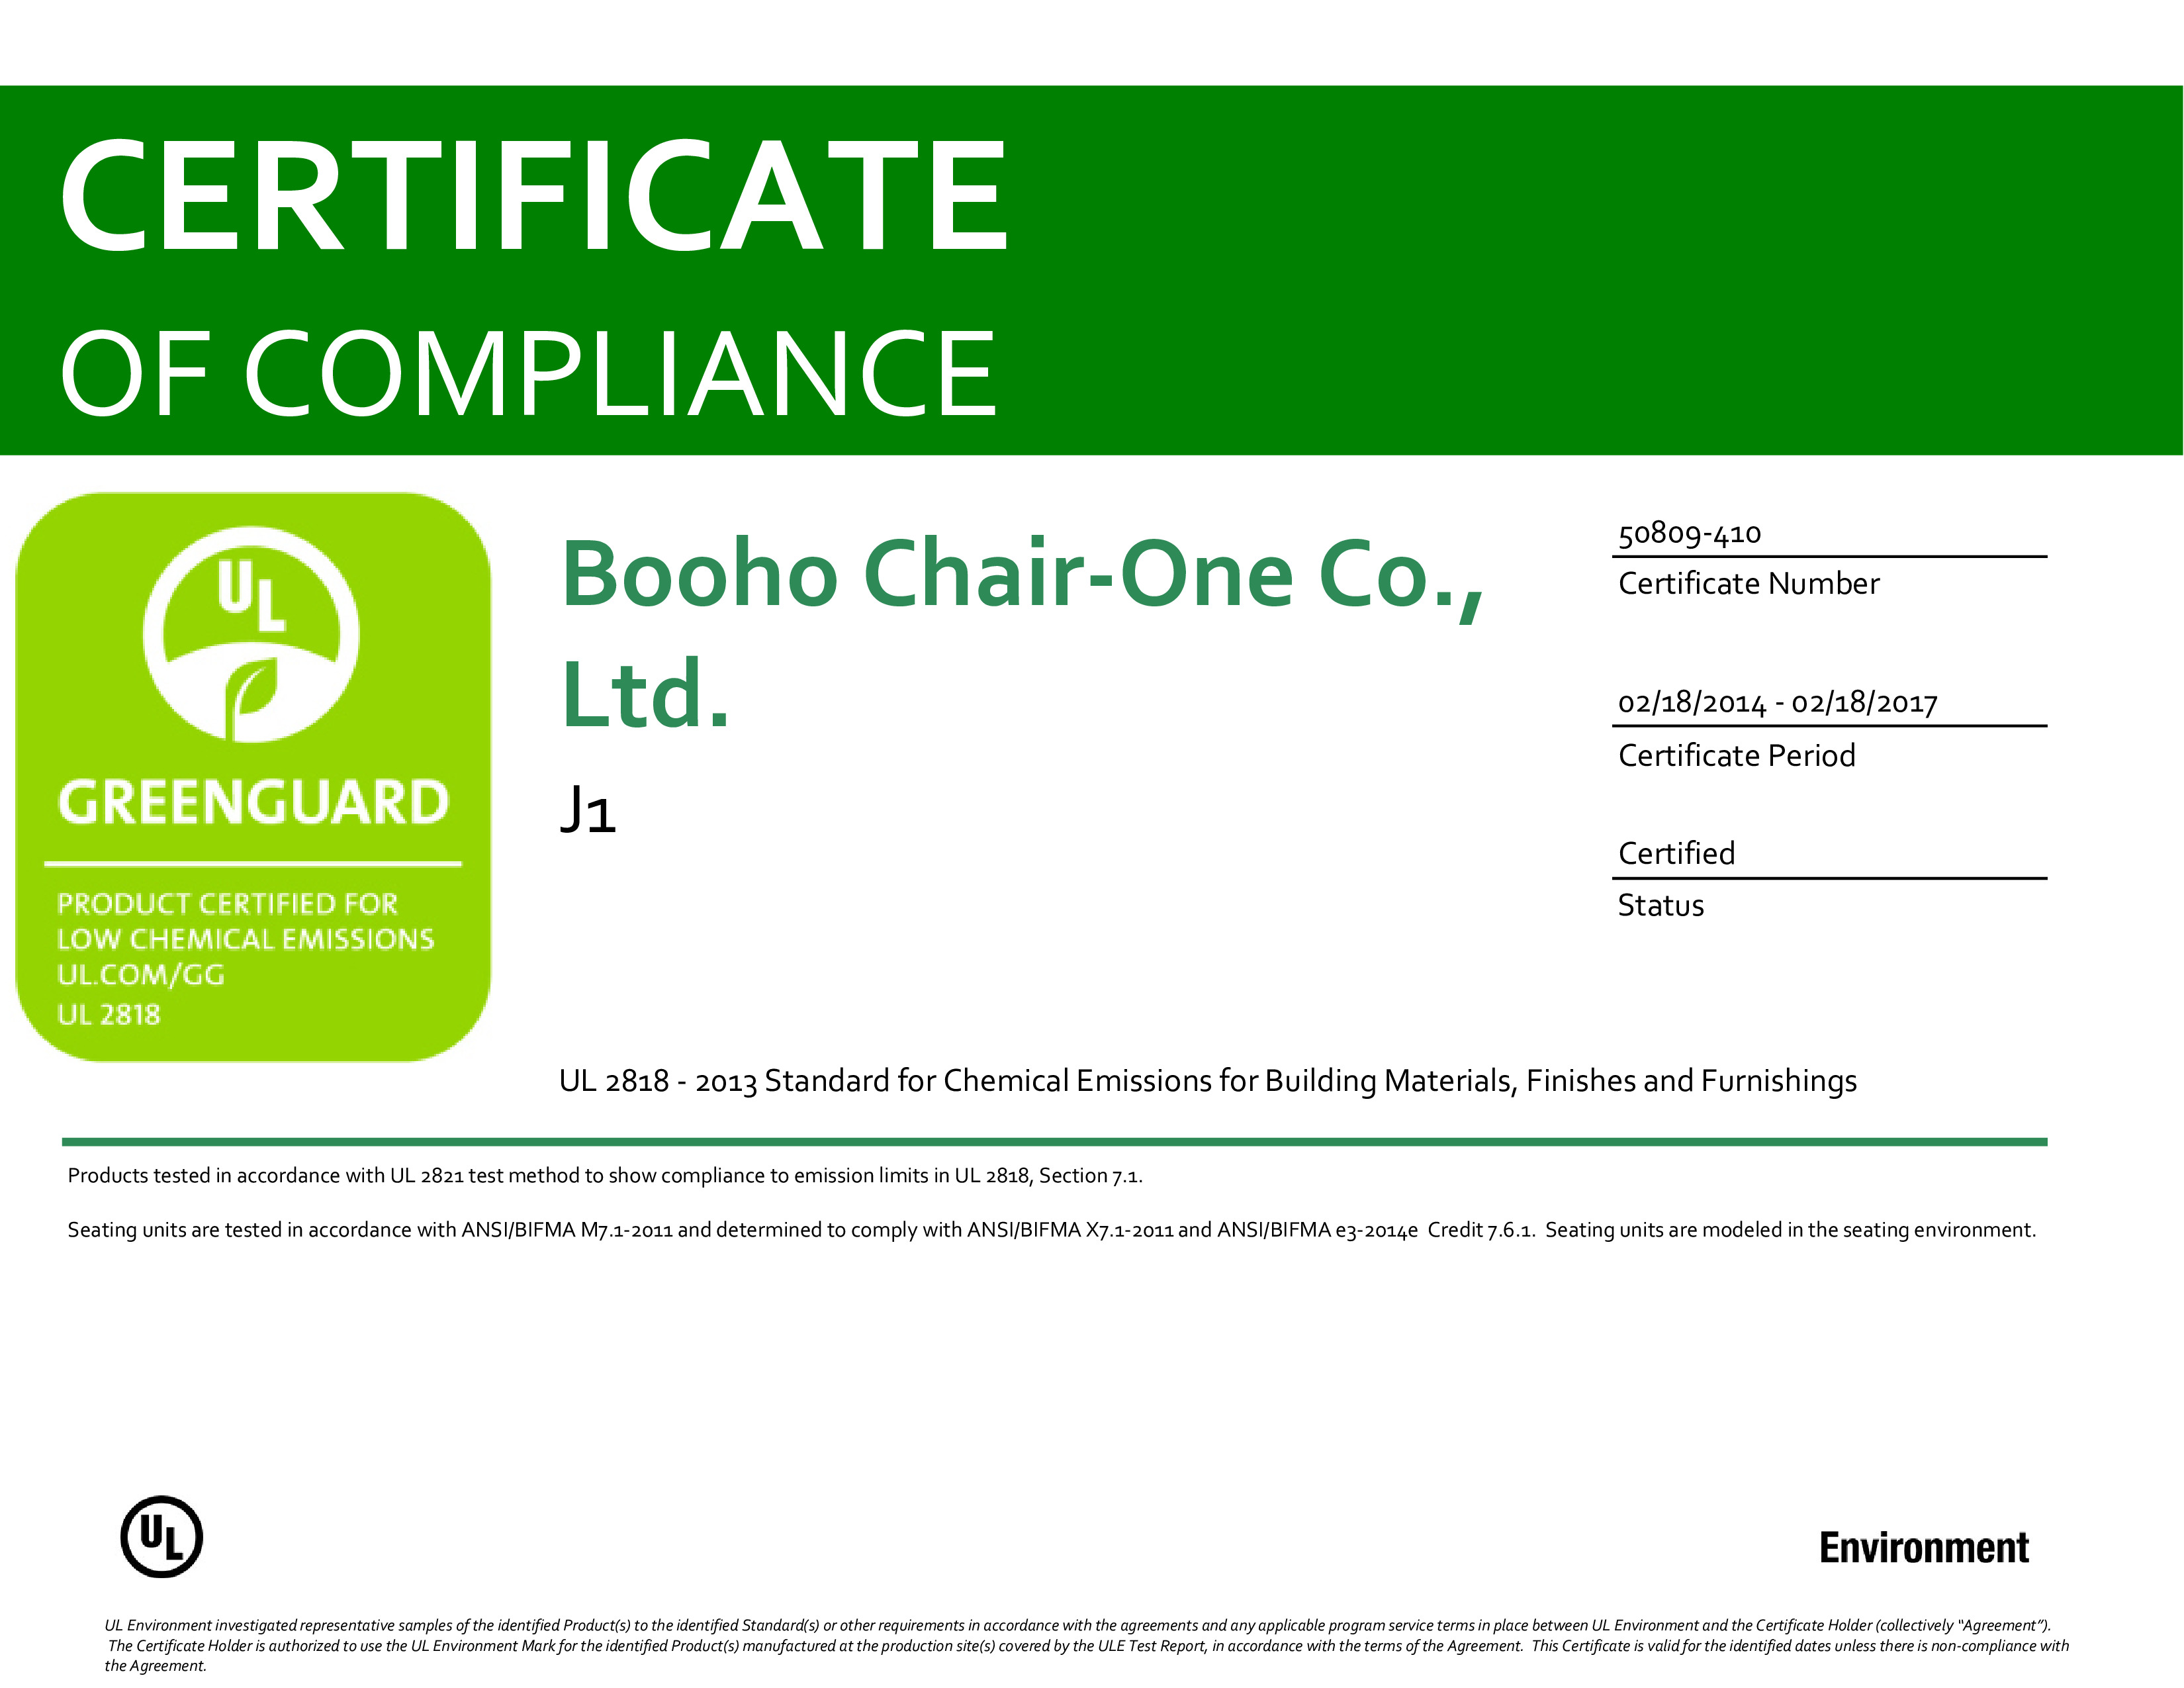 J1 - Greenguard certificate